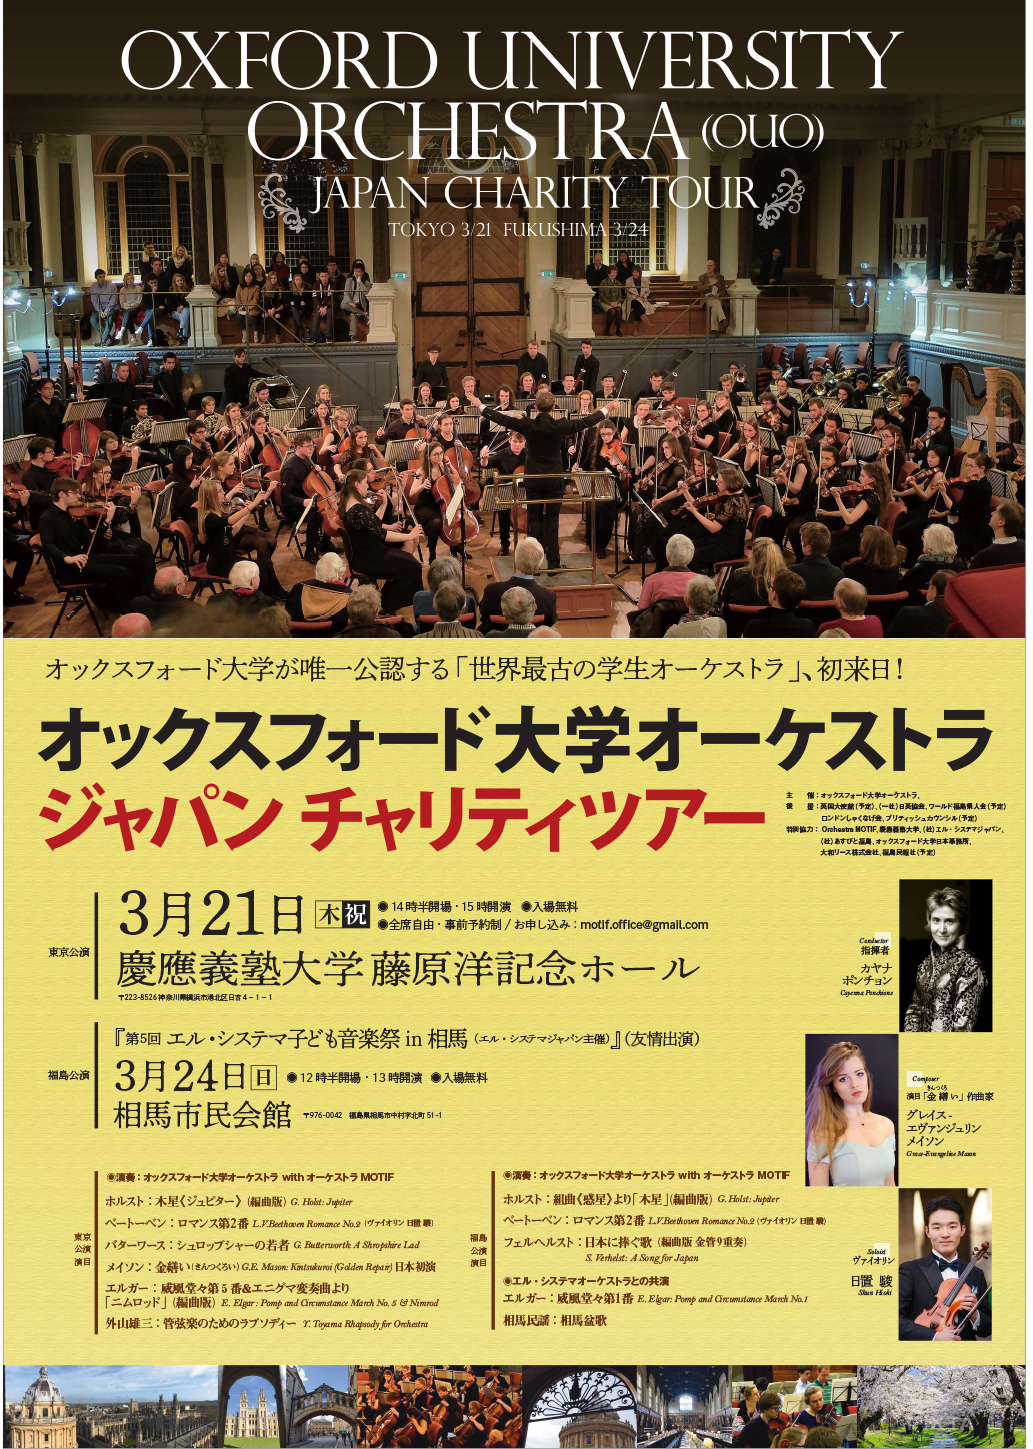 Oxford University Orchestraが日本ツアー